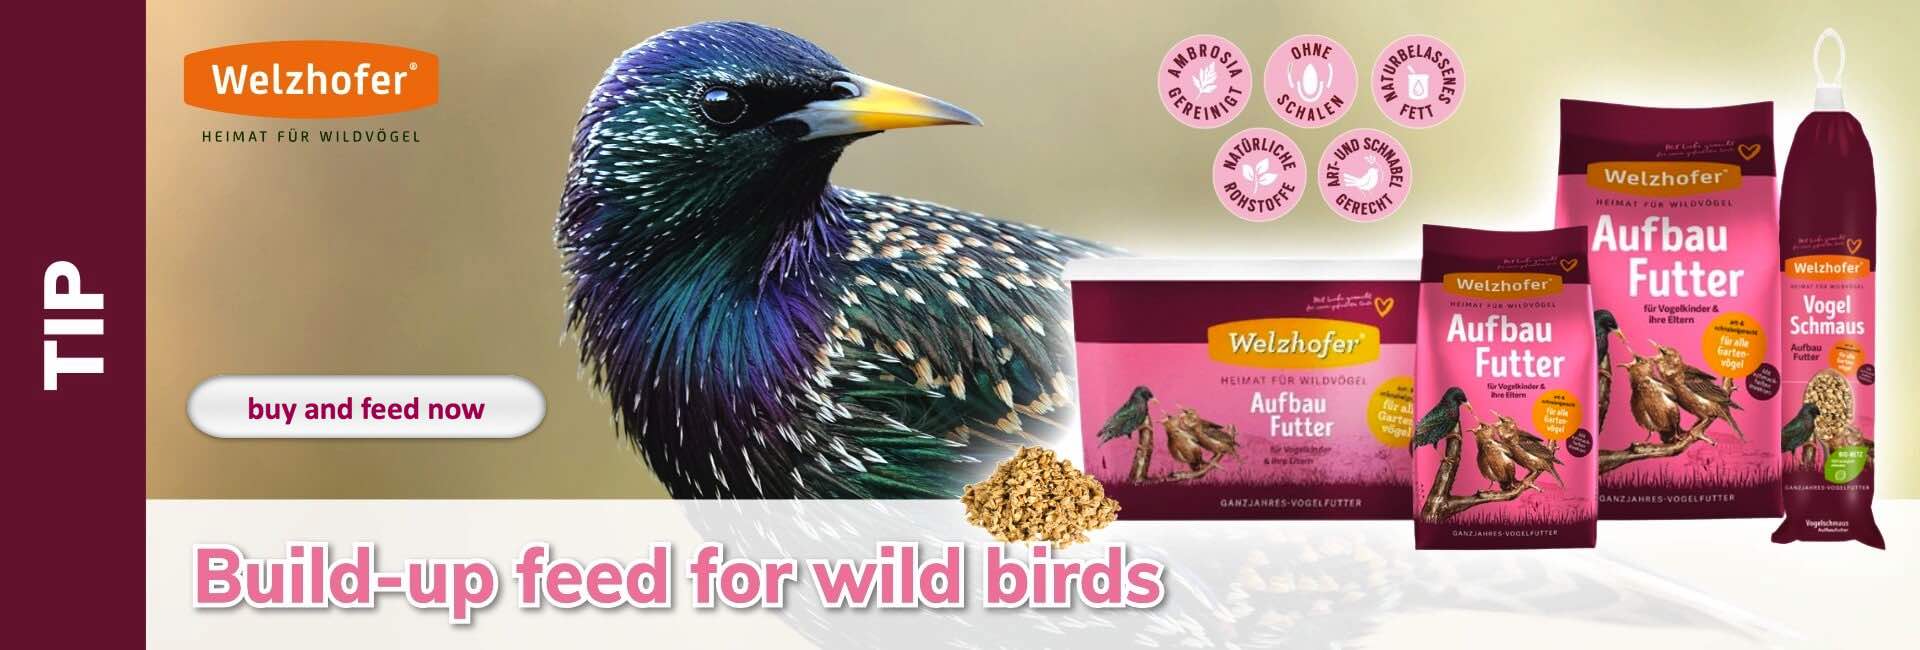 Welzhofer Build-up feed for wild birds